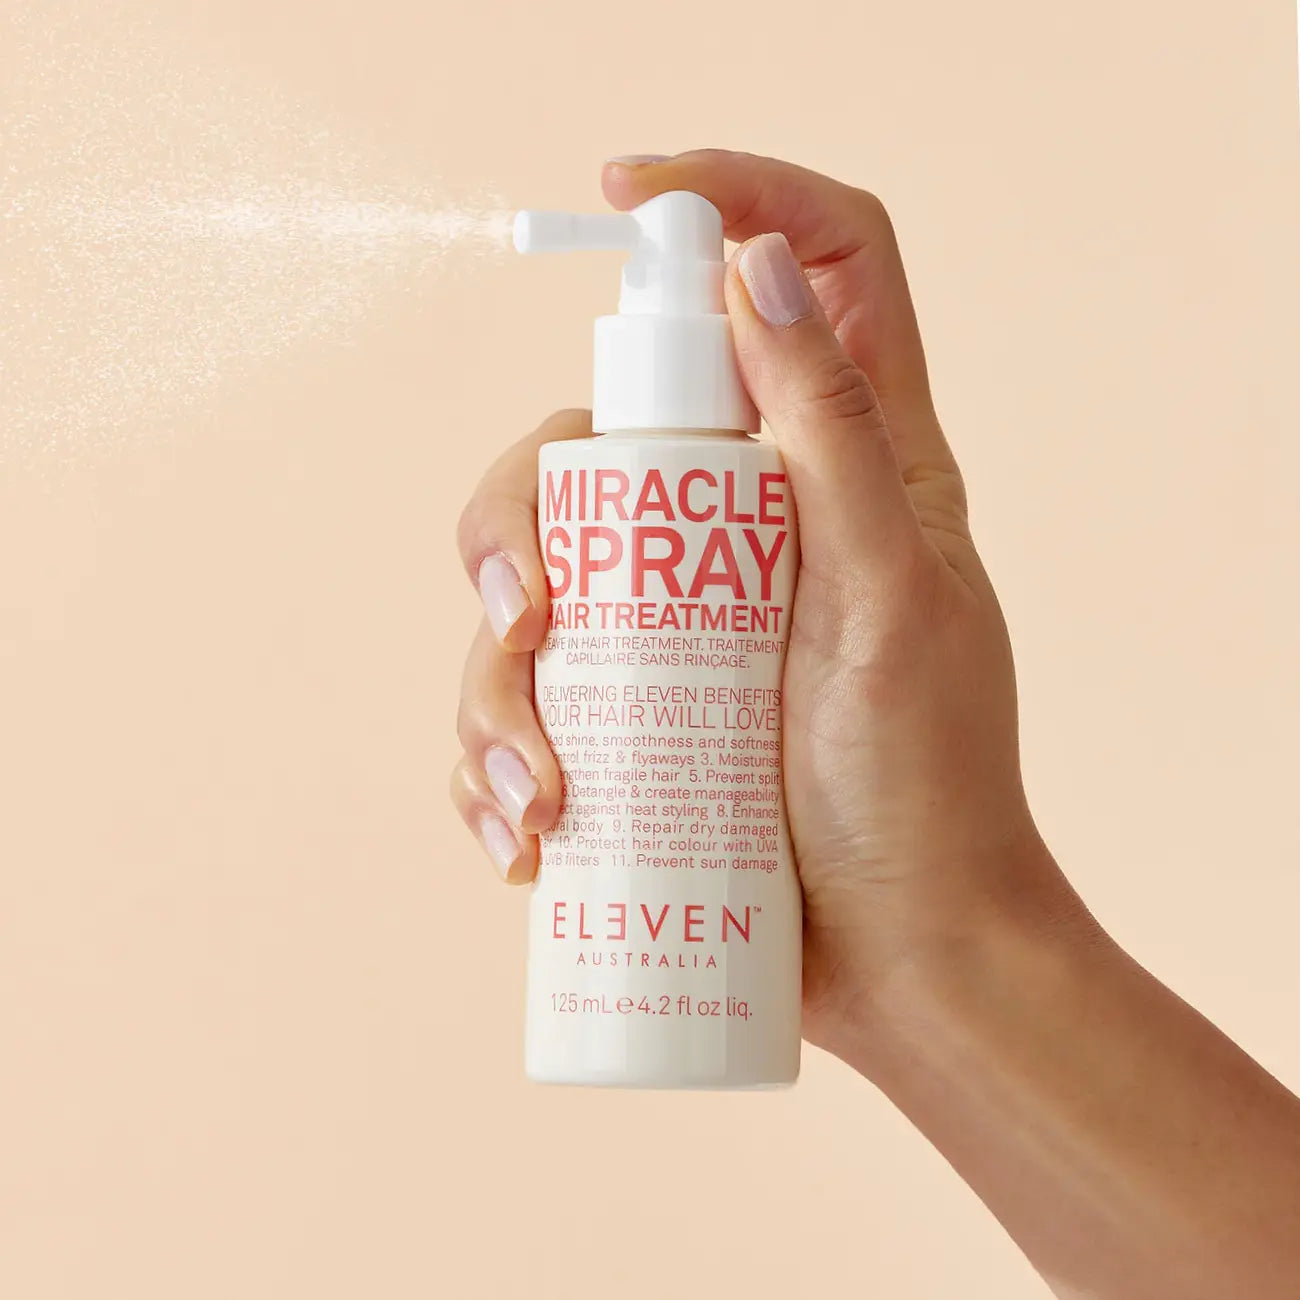 ELEVEN Australia Miracle Spray Hair Treatment 125ml 5